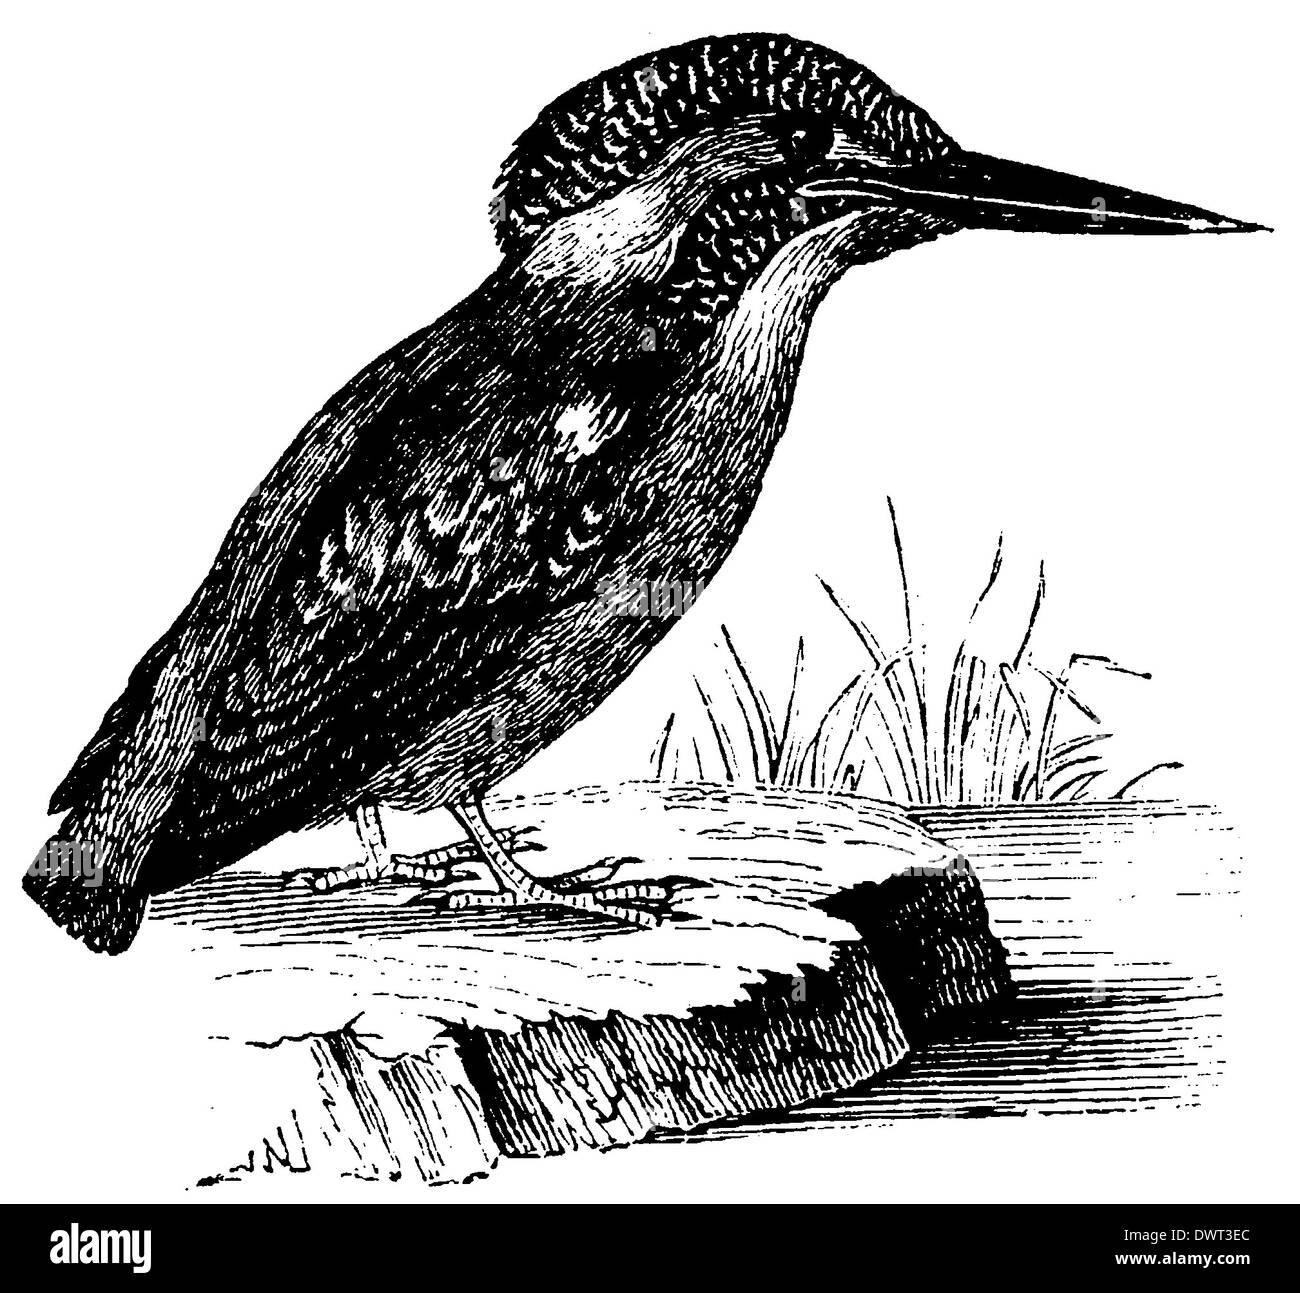 Kingfisher illustration Black and White Stock Photos & Images - Alamy